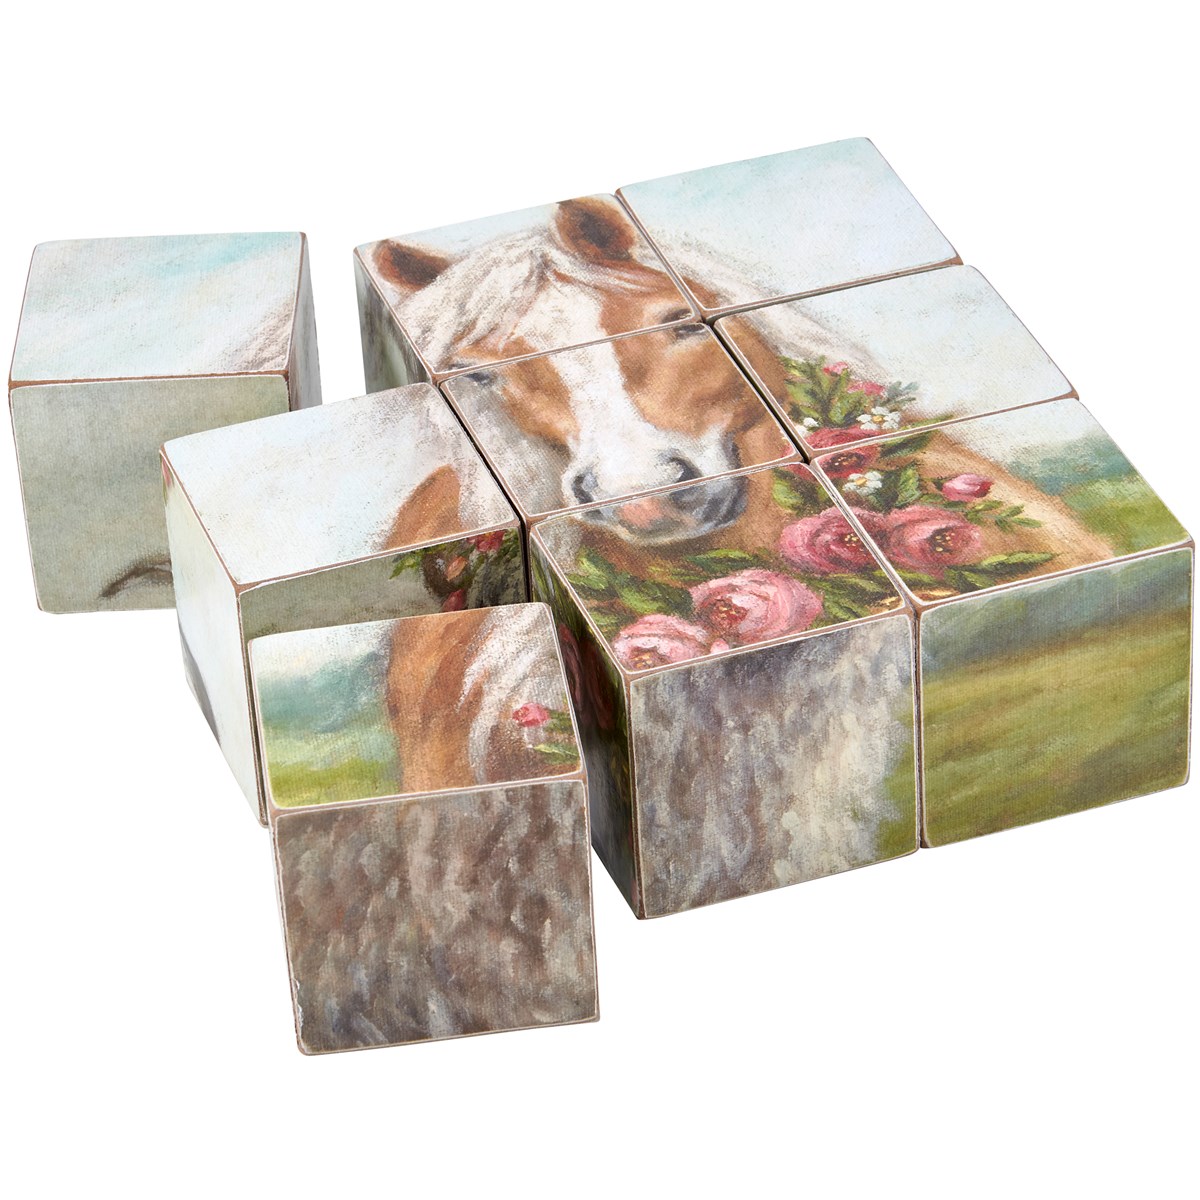 Floral Animal Block Puzzle - Wood, Paper, Jute